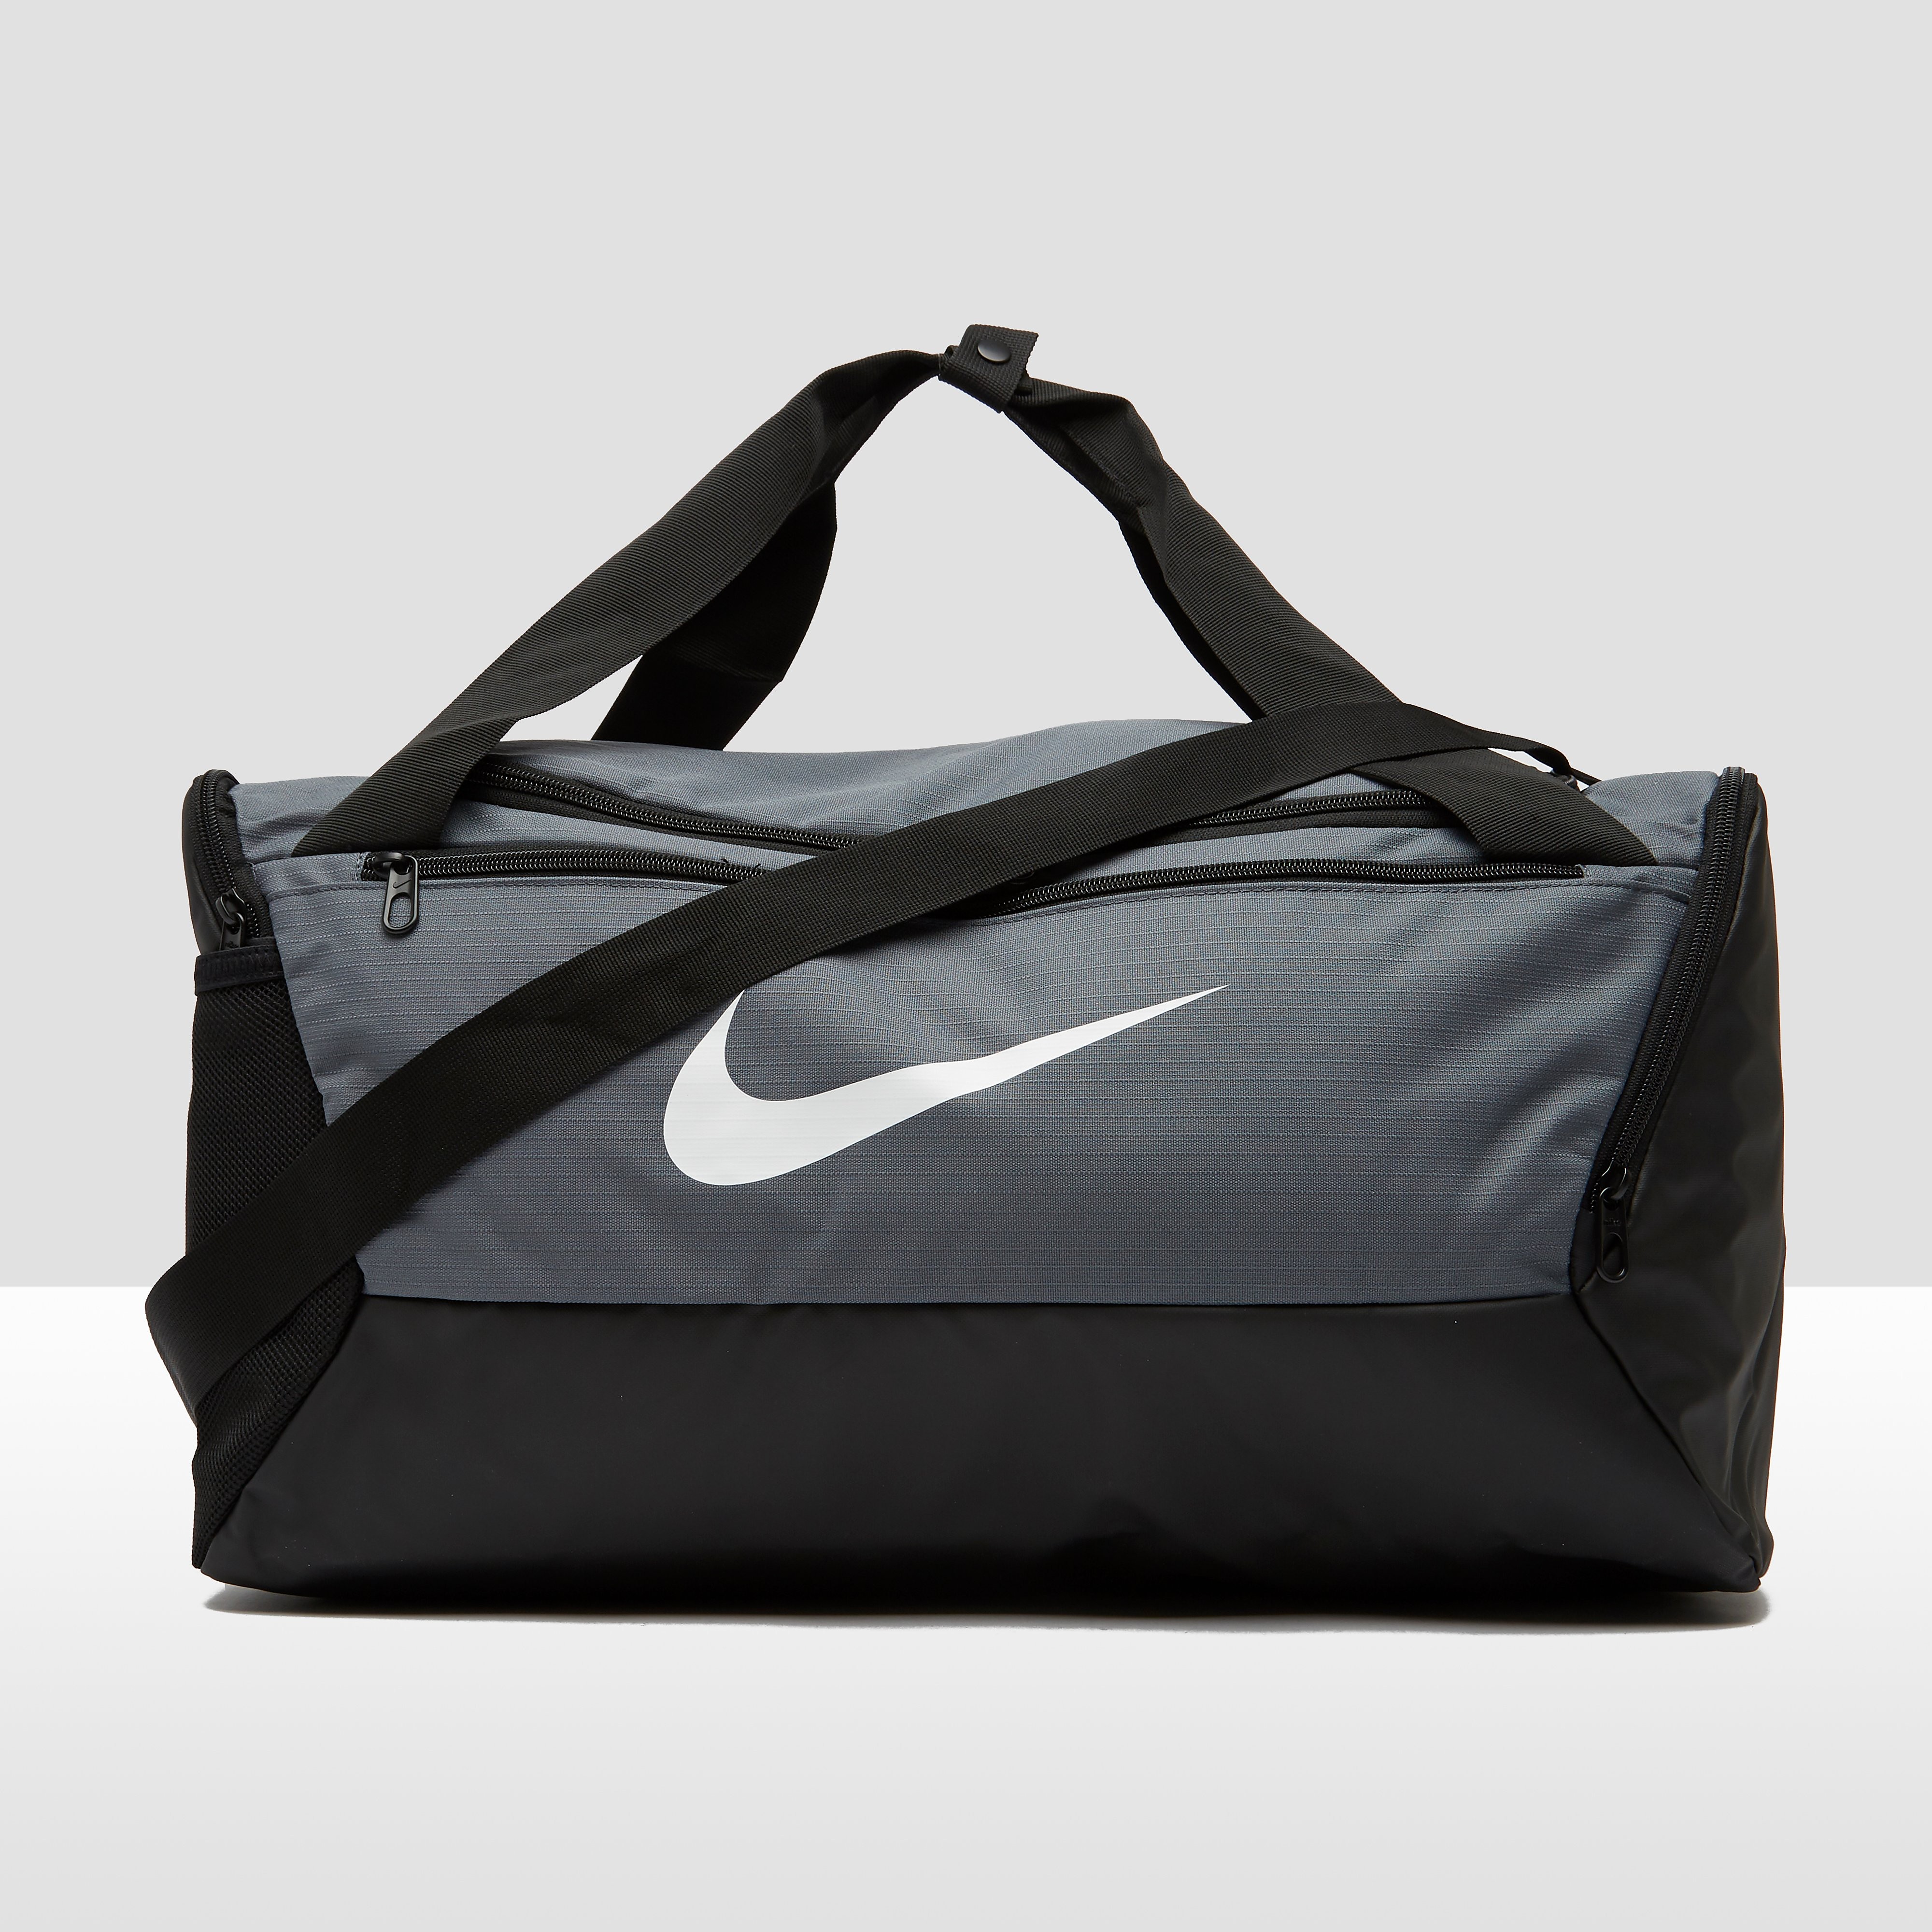 Nike Nike brasilia duffel voetbaltas small grijs zwart heren